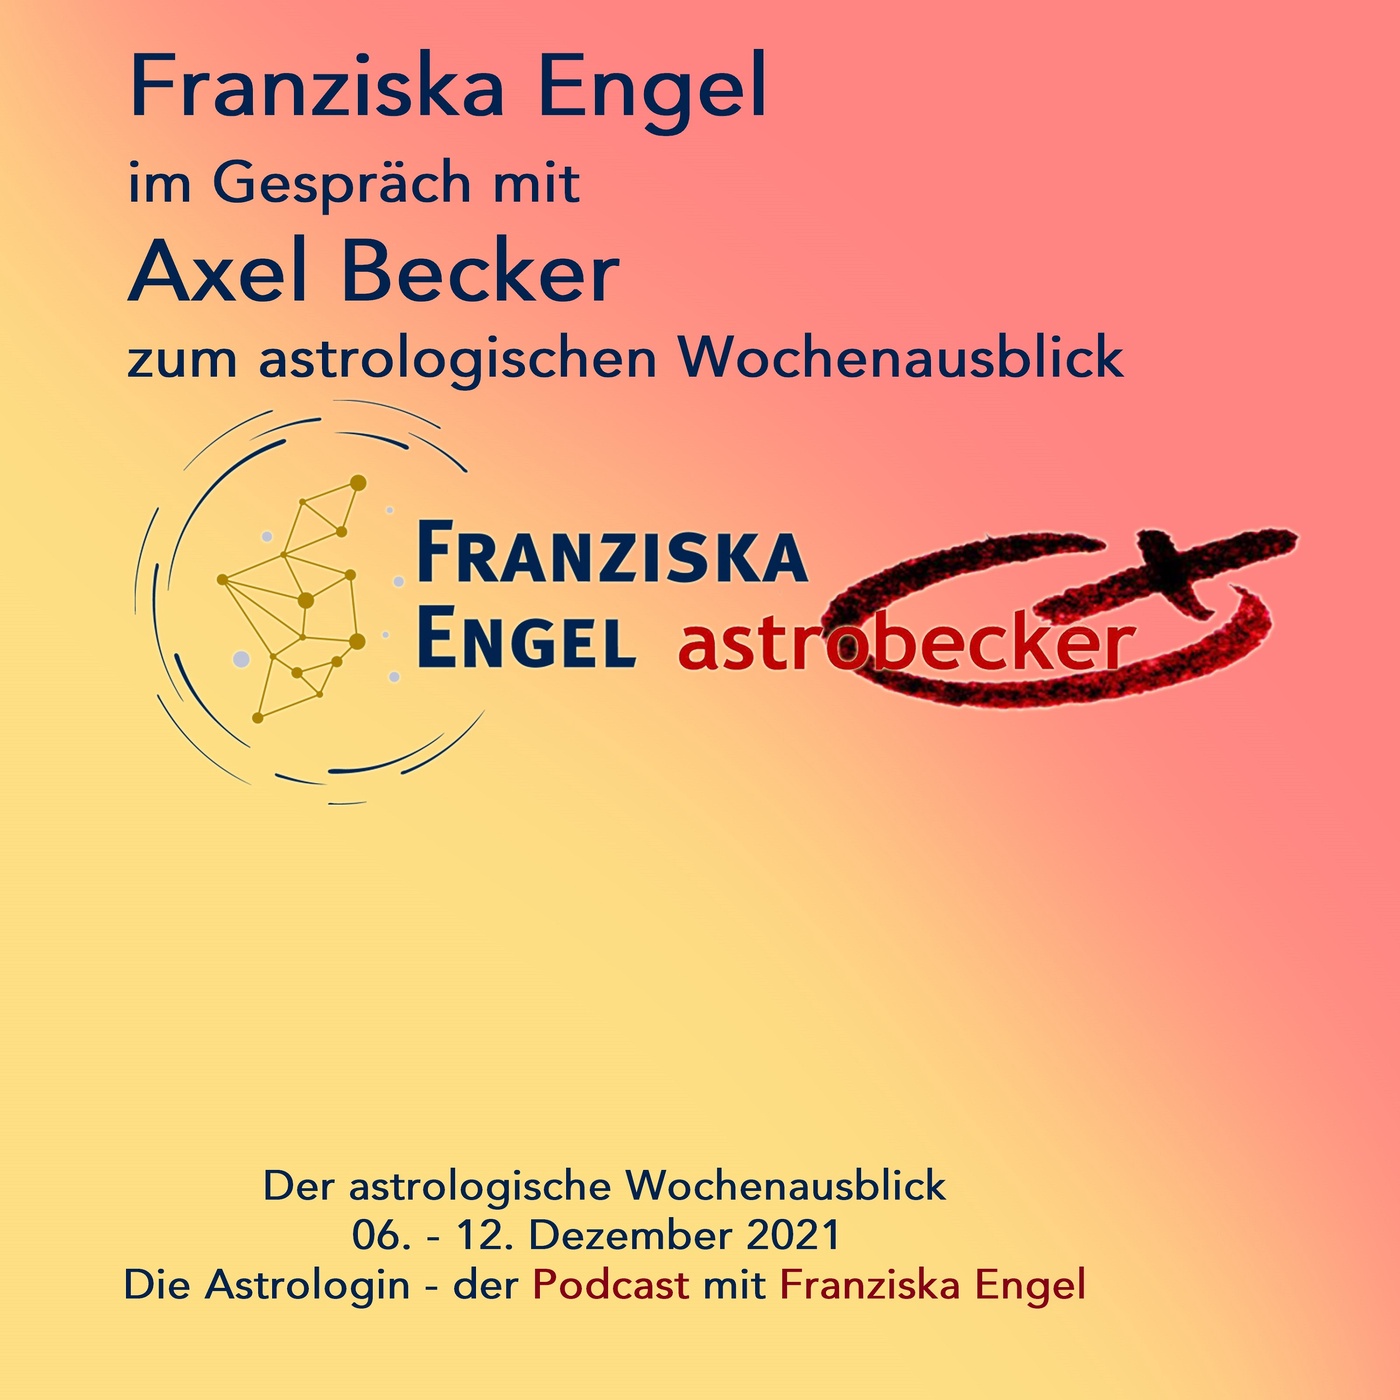 Franziska Engel im Gespräch mit Axel Becker